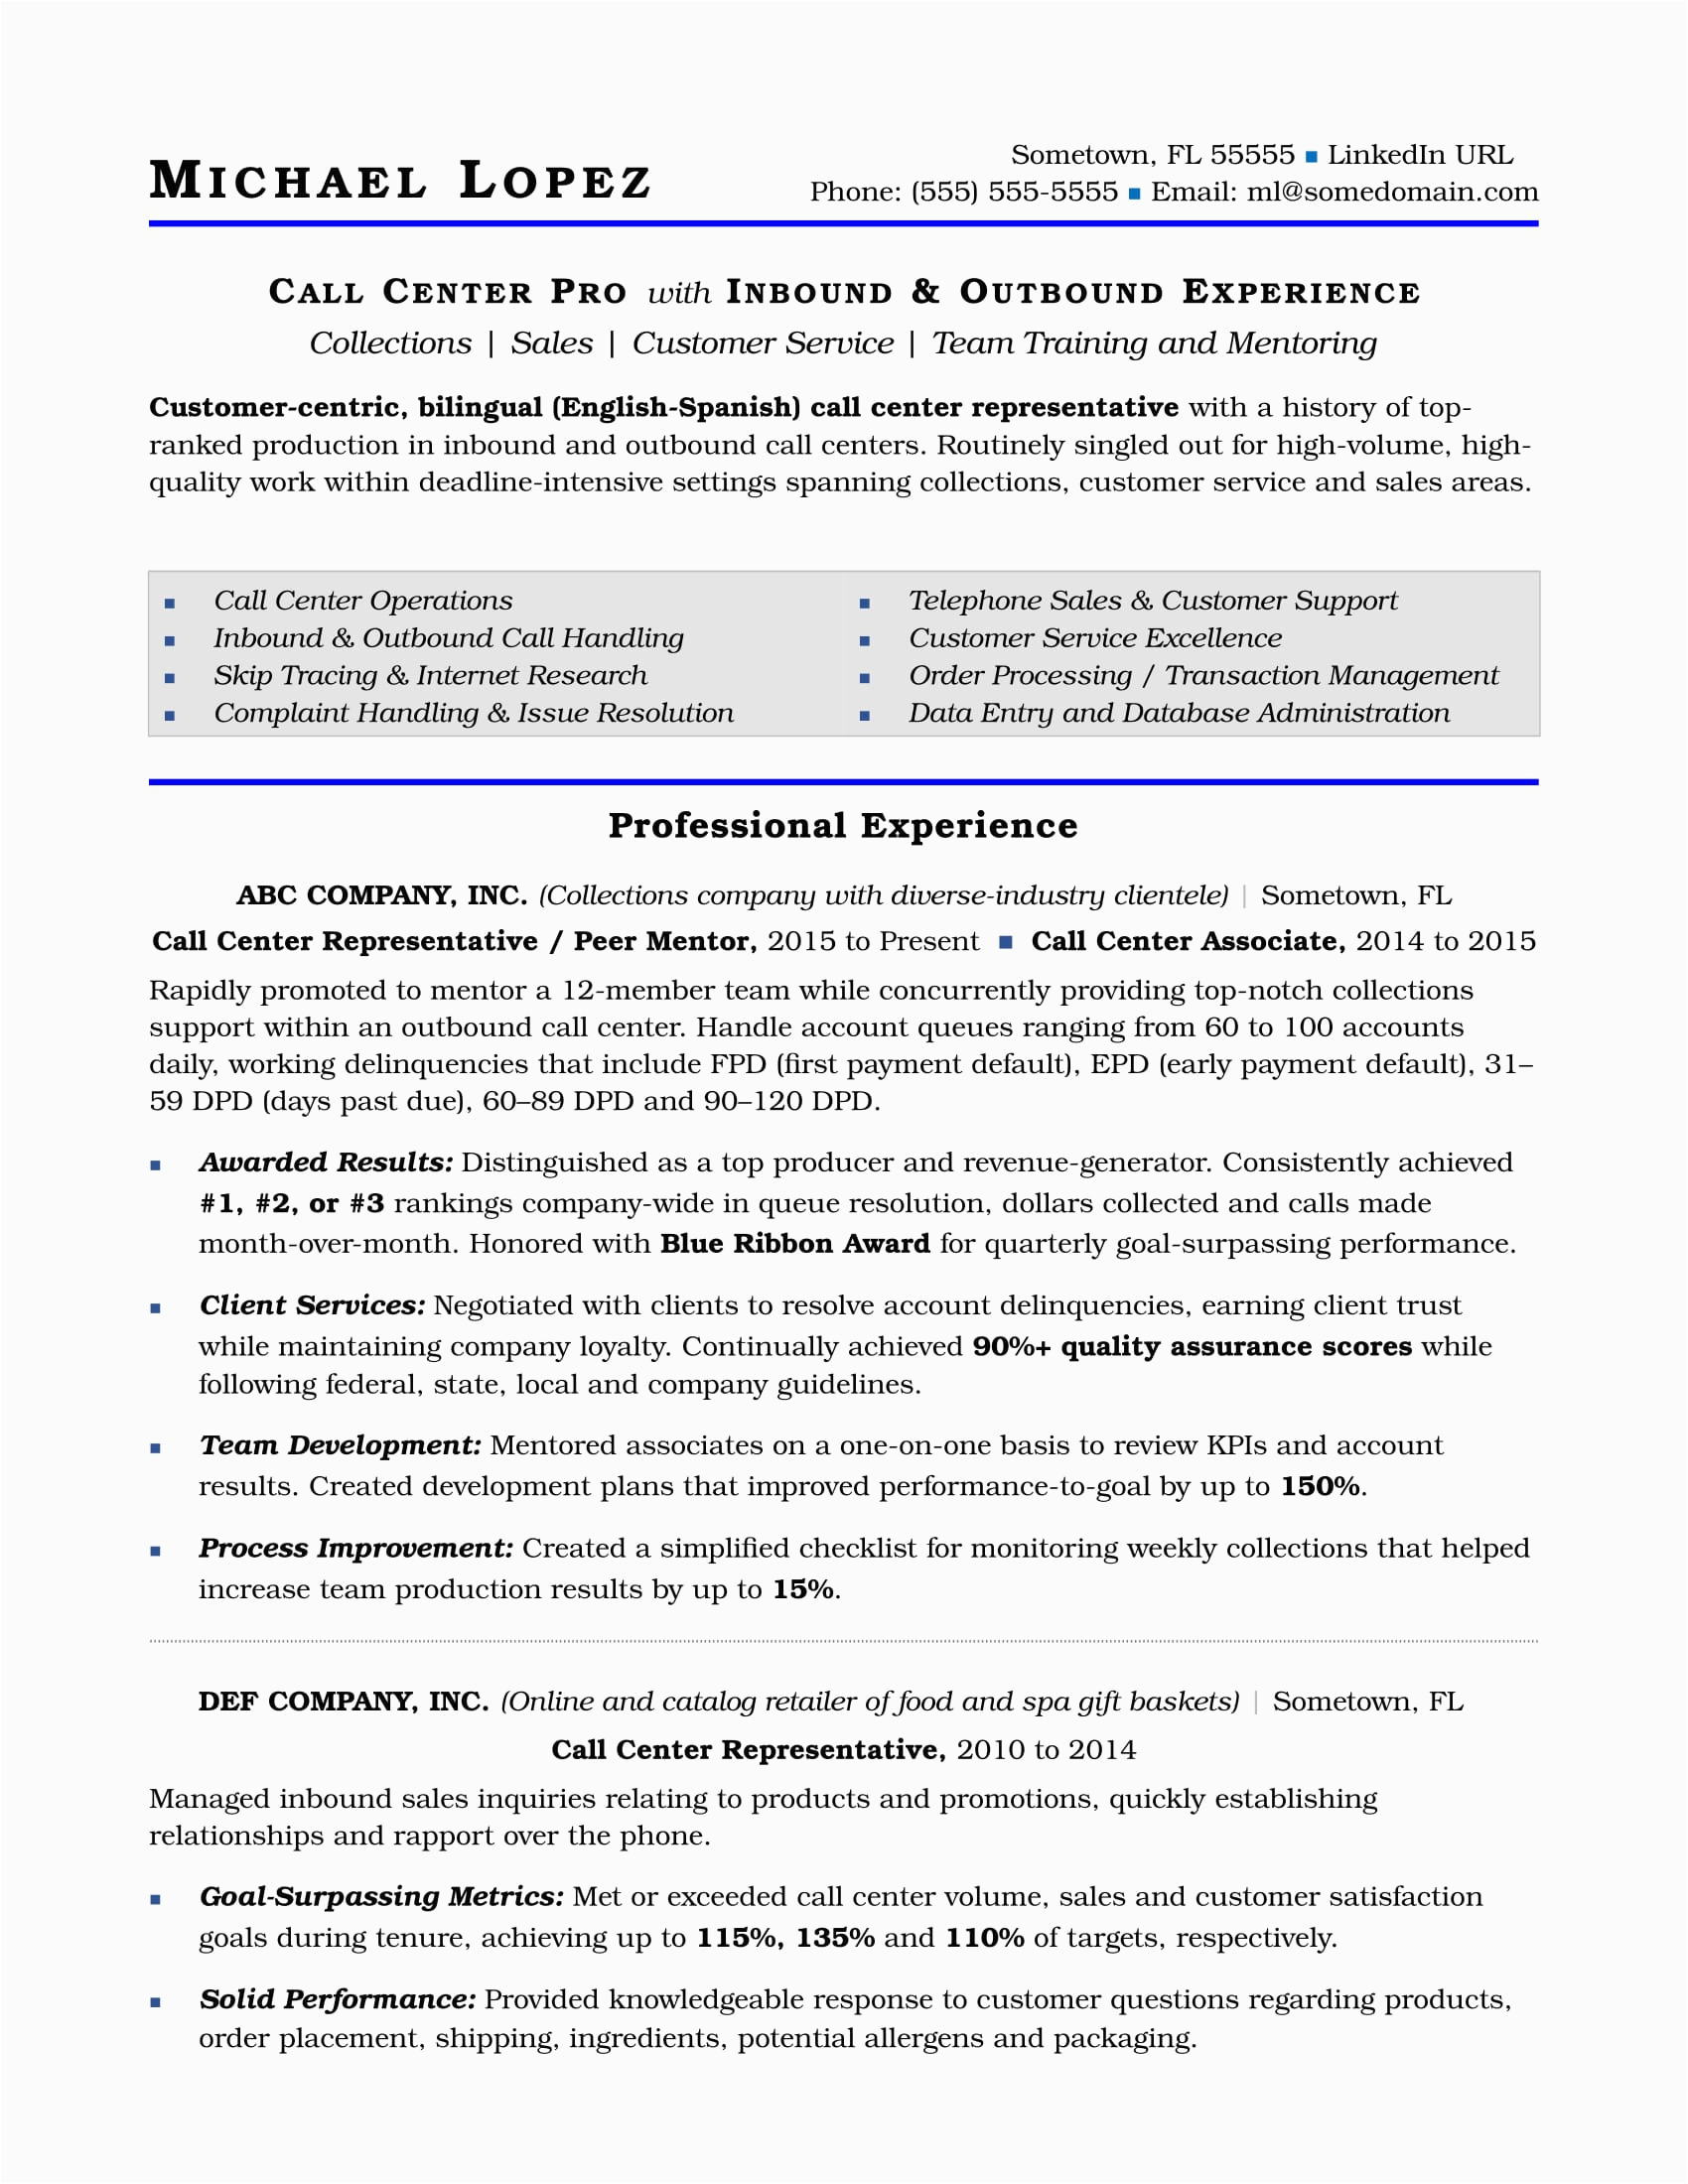 Sample Resume for Call Center Agent Undergraduate Call Center Resume Sample